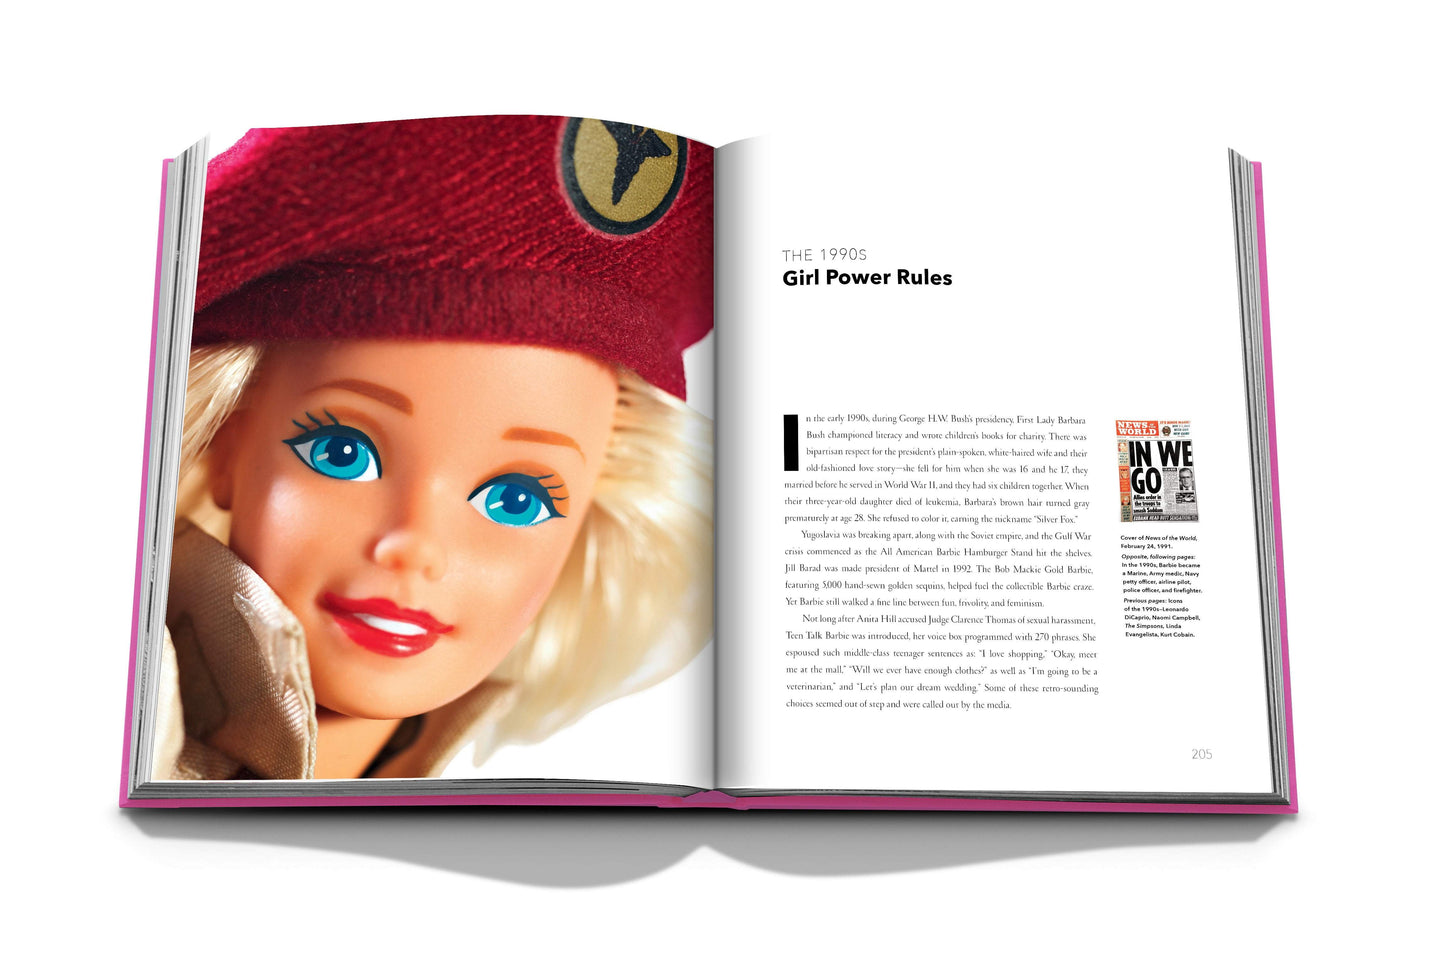 Livre Barbie: 60 Years of Inspiration